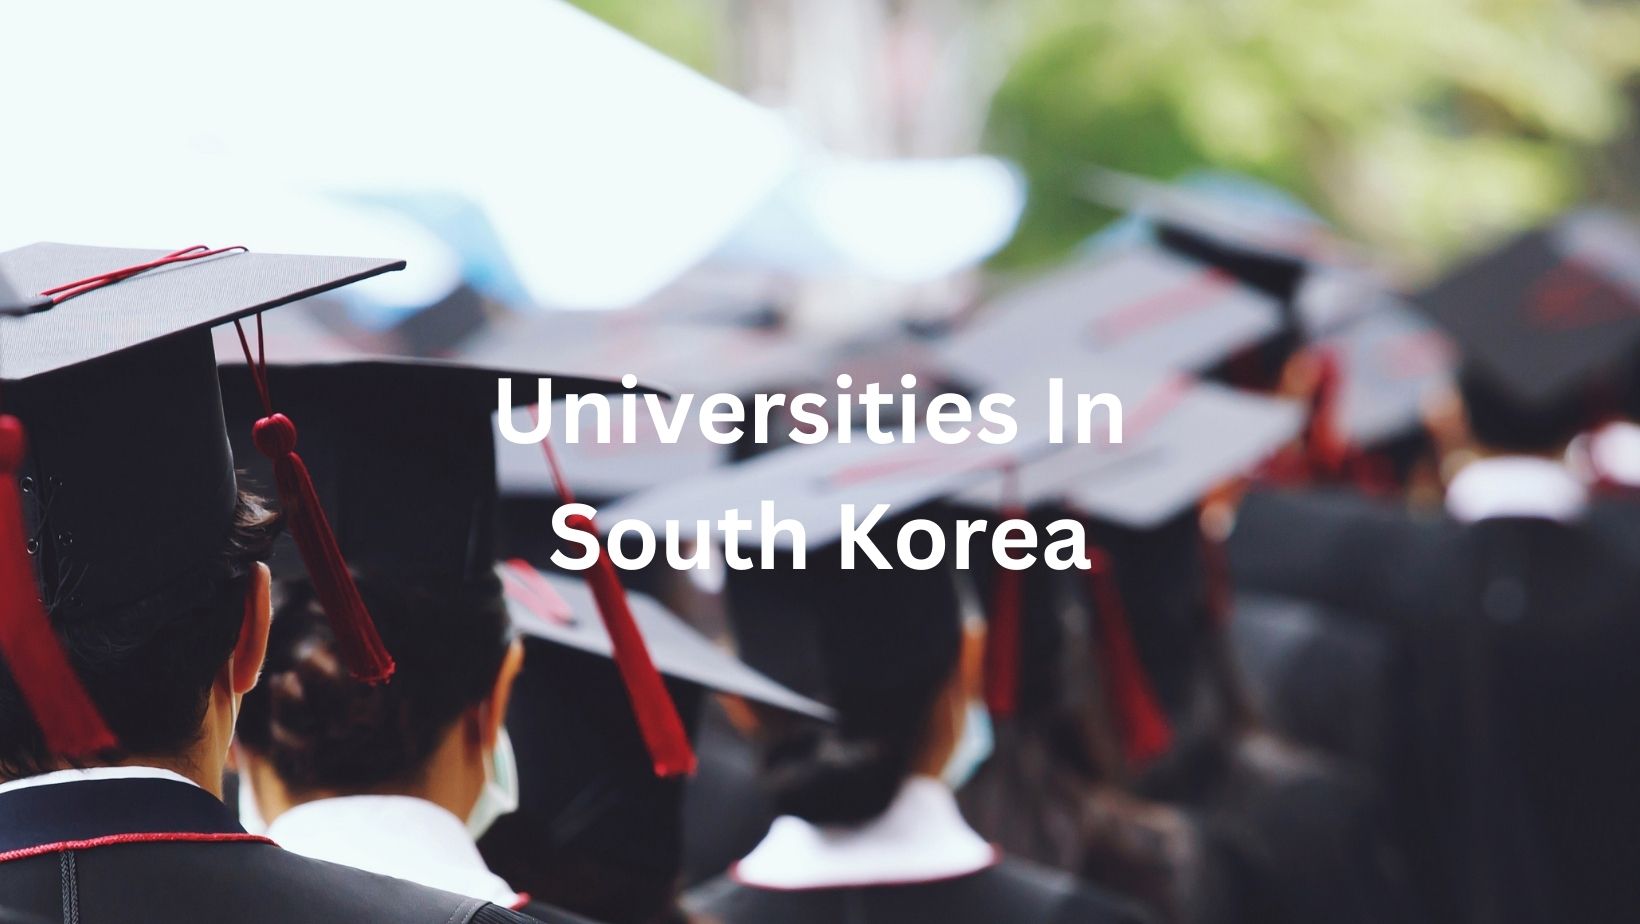 Korea University in South Korea